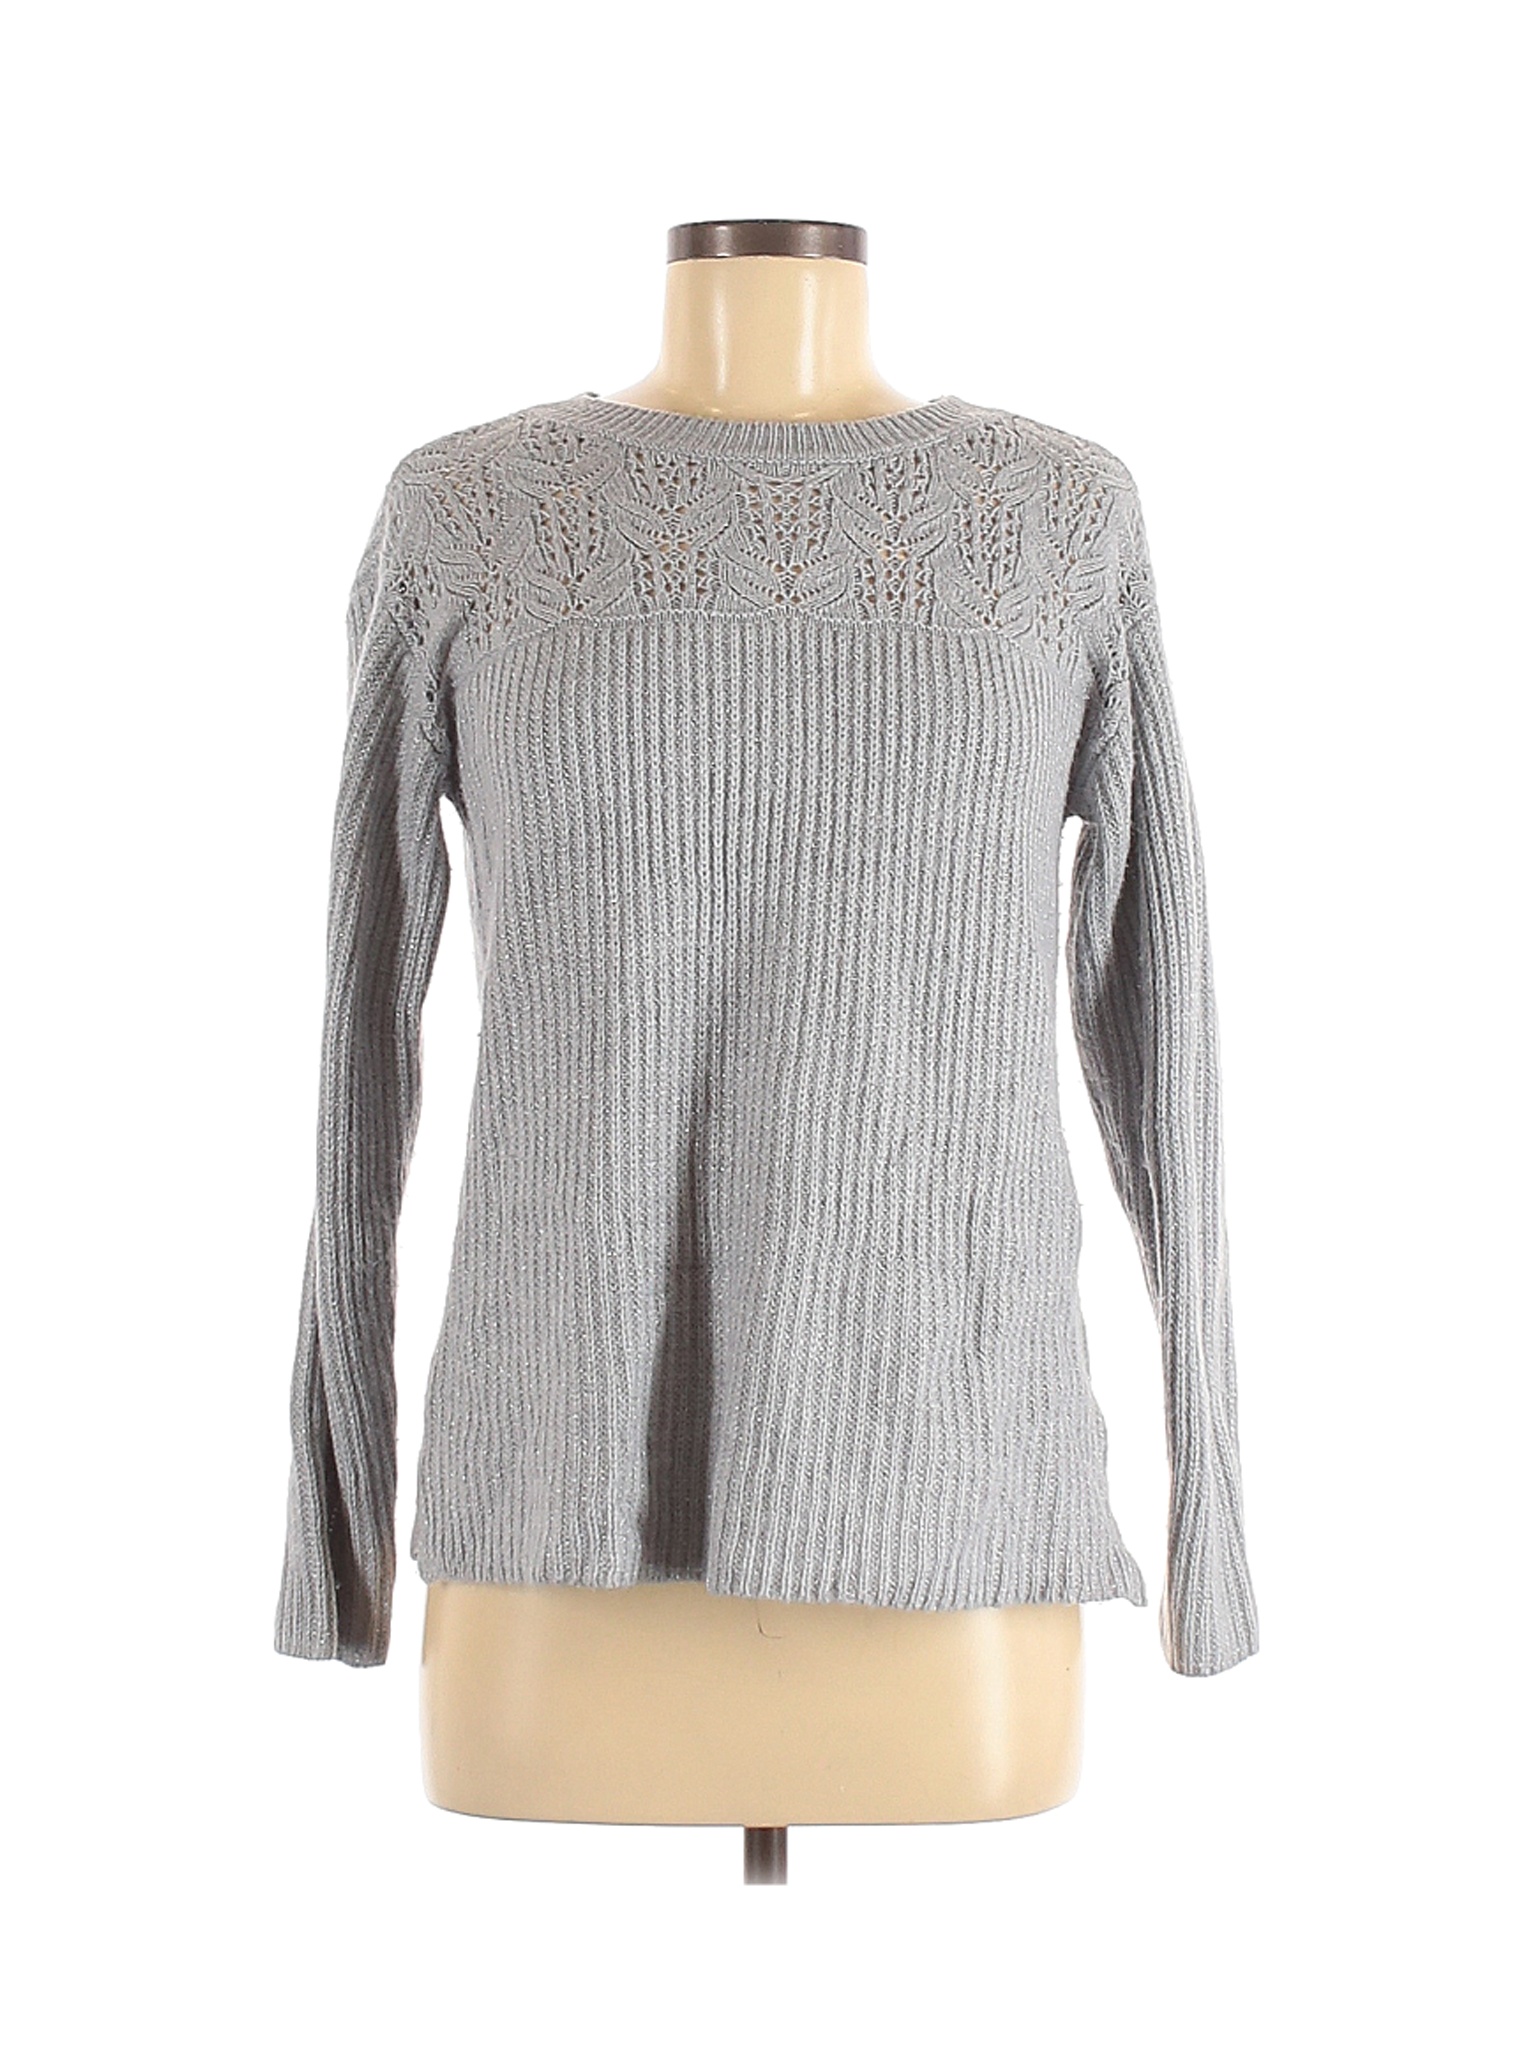 St. John's Bay Women Gray Pullover Sweater M | eBay